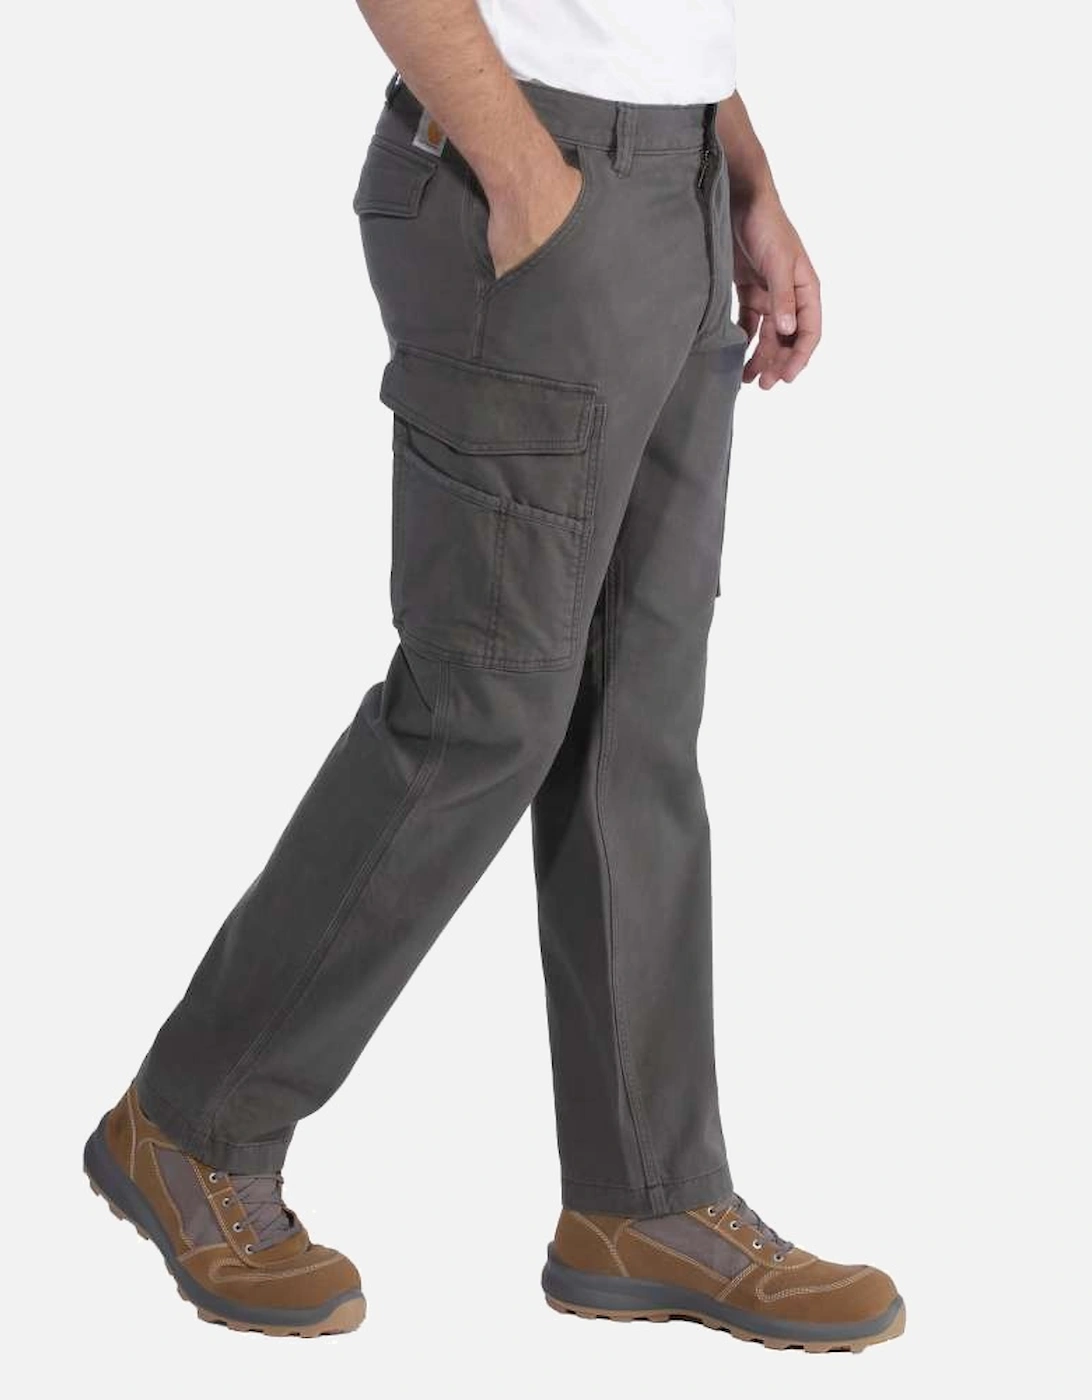 Carhartt Mens Rugged Flex Rigby Durable Cargo Pants Trousers